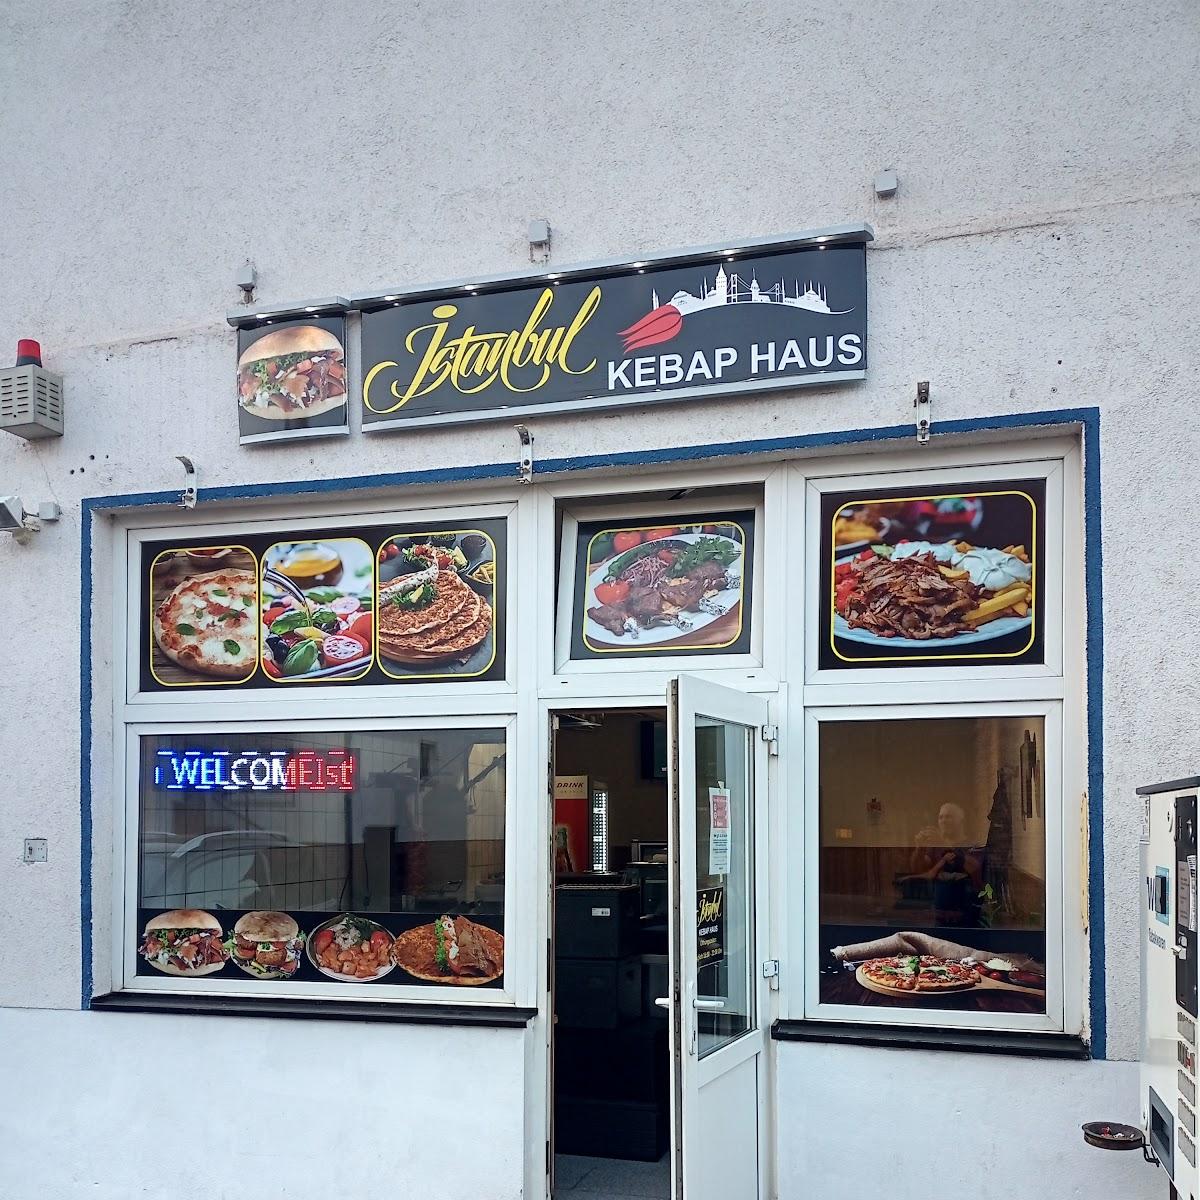 Restaurant "Istanbul kebap Haus" in Ronshausen